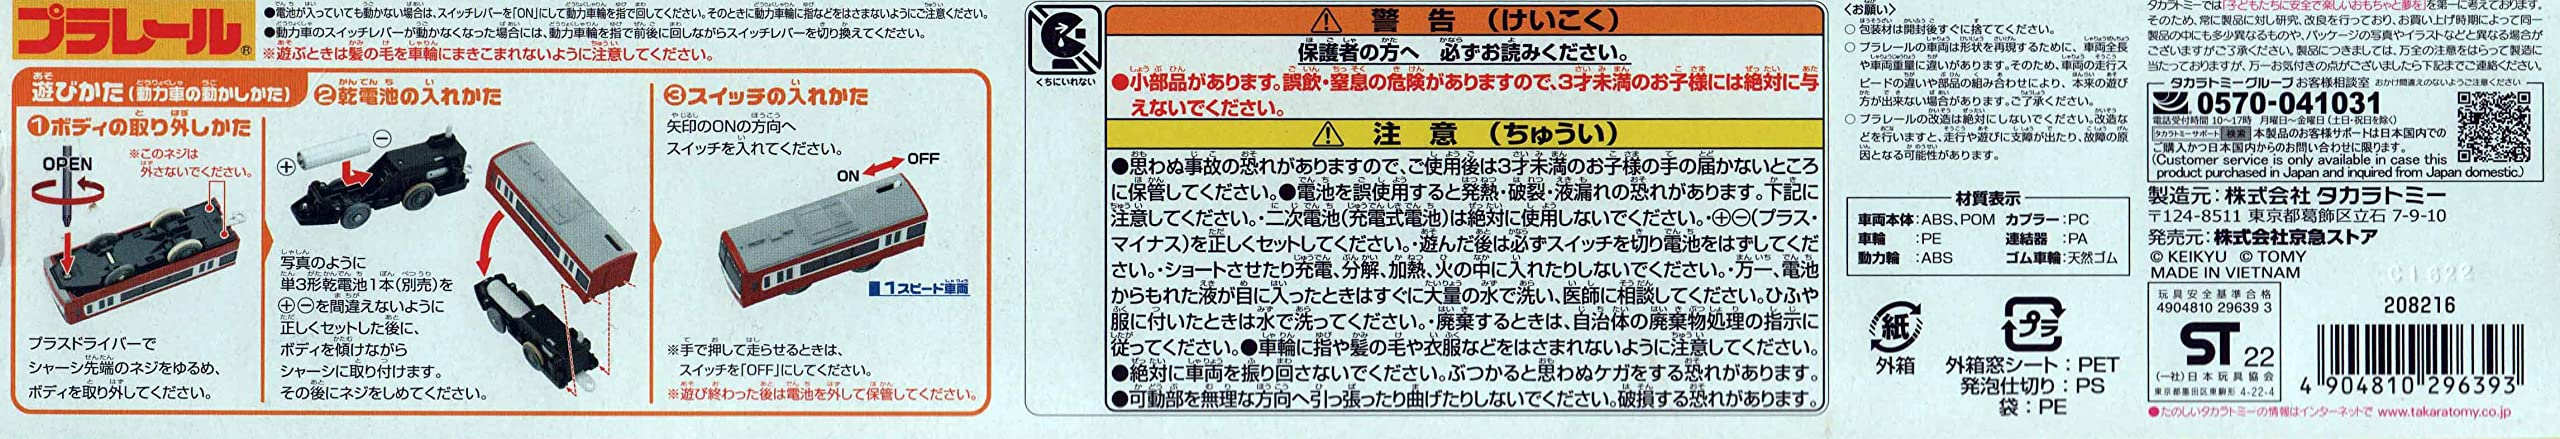 Takara Tomy Plarail Keikyu Type 2100 Exclusive Connection Edition